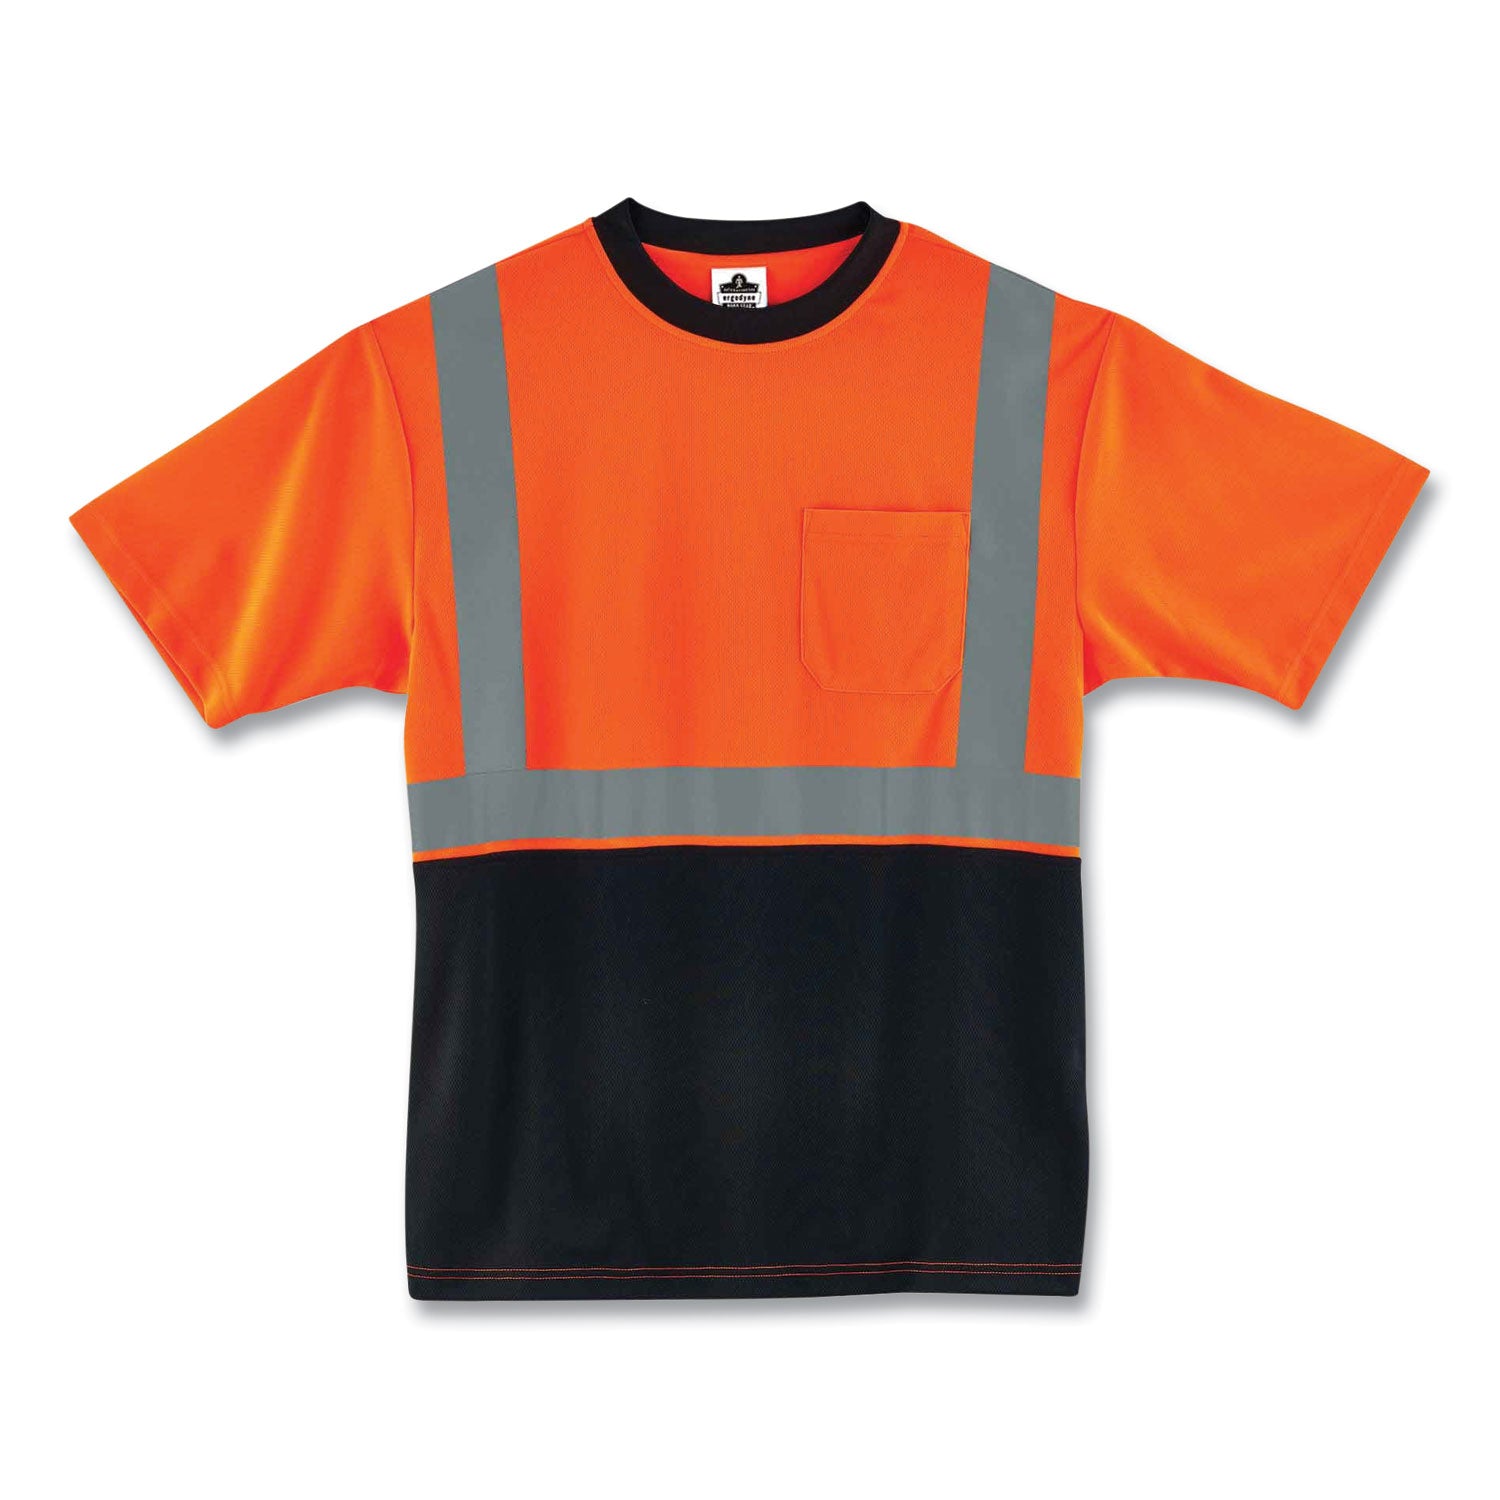 glowear-8289bk-class-2-hi-vis-t-shirt-with-black-bottom-3x-large-orange-ships-in-1-3-business-days_ego22517 - 1